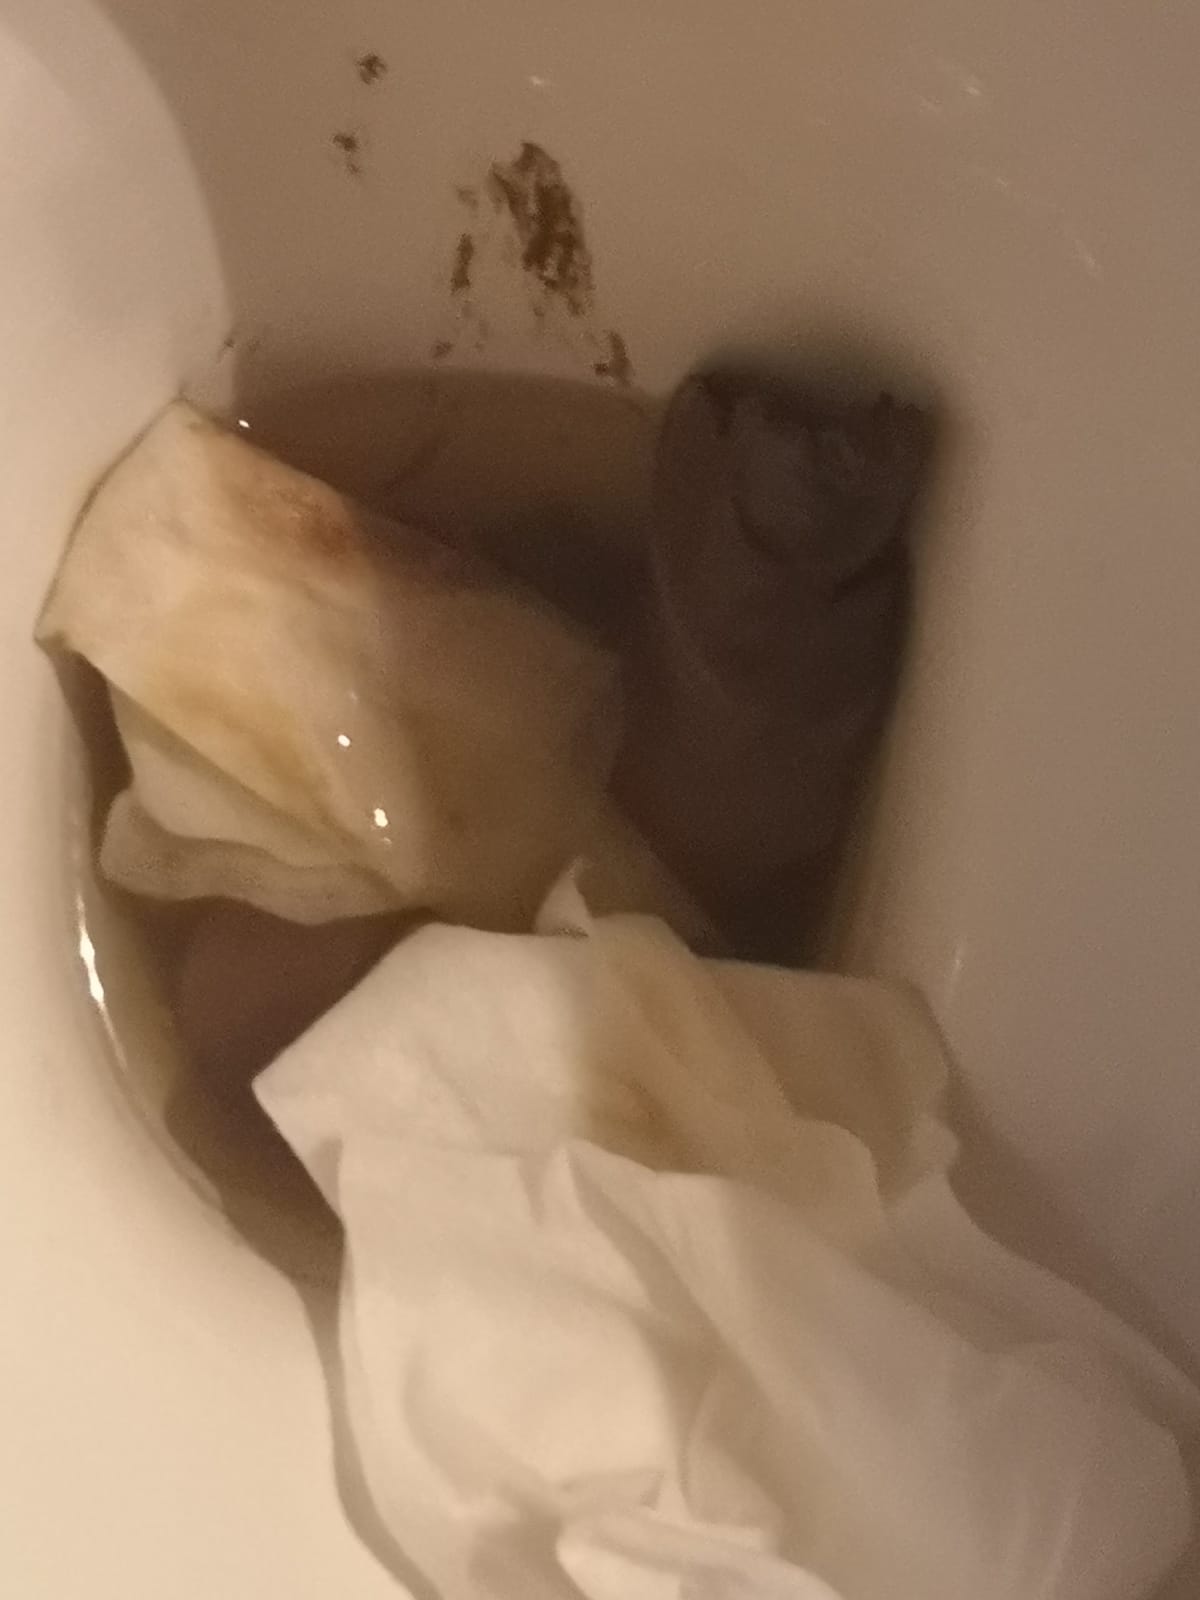 My girlfriend poop after 3 days